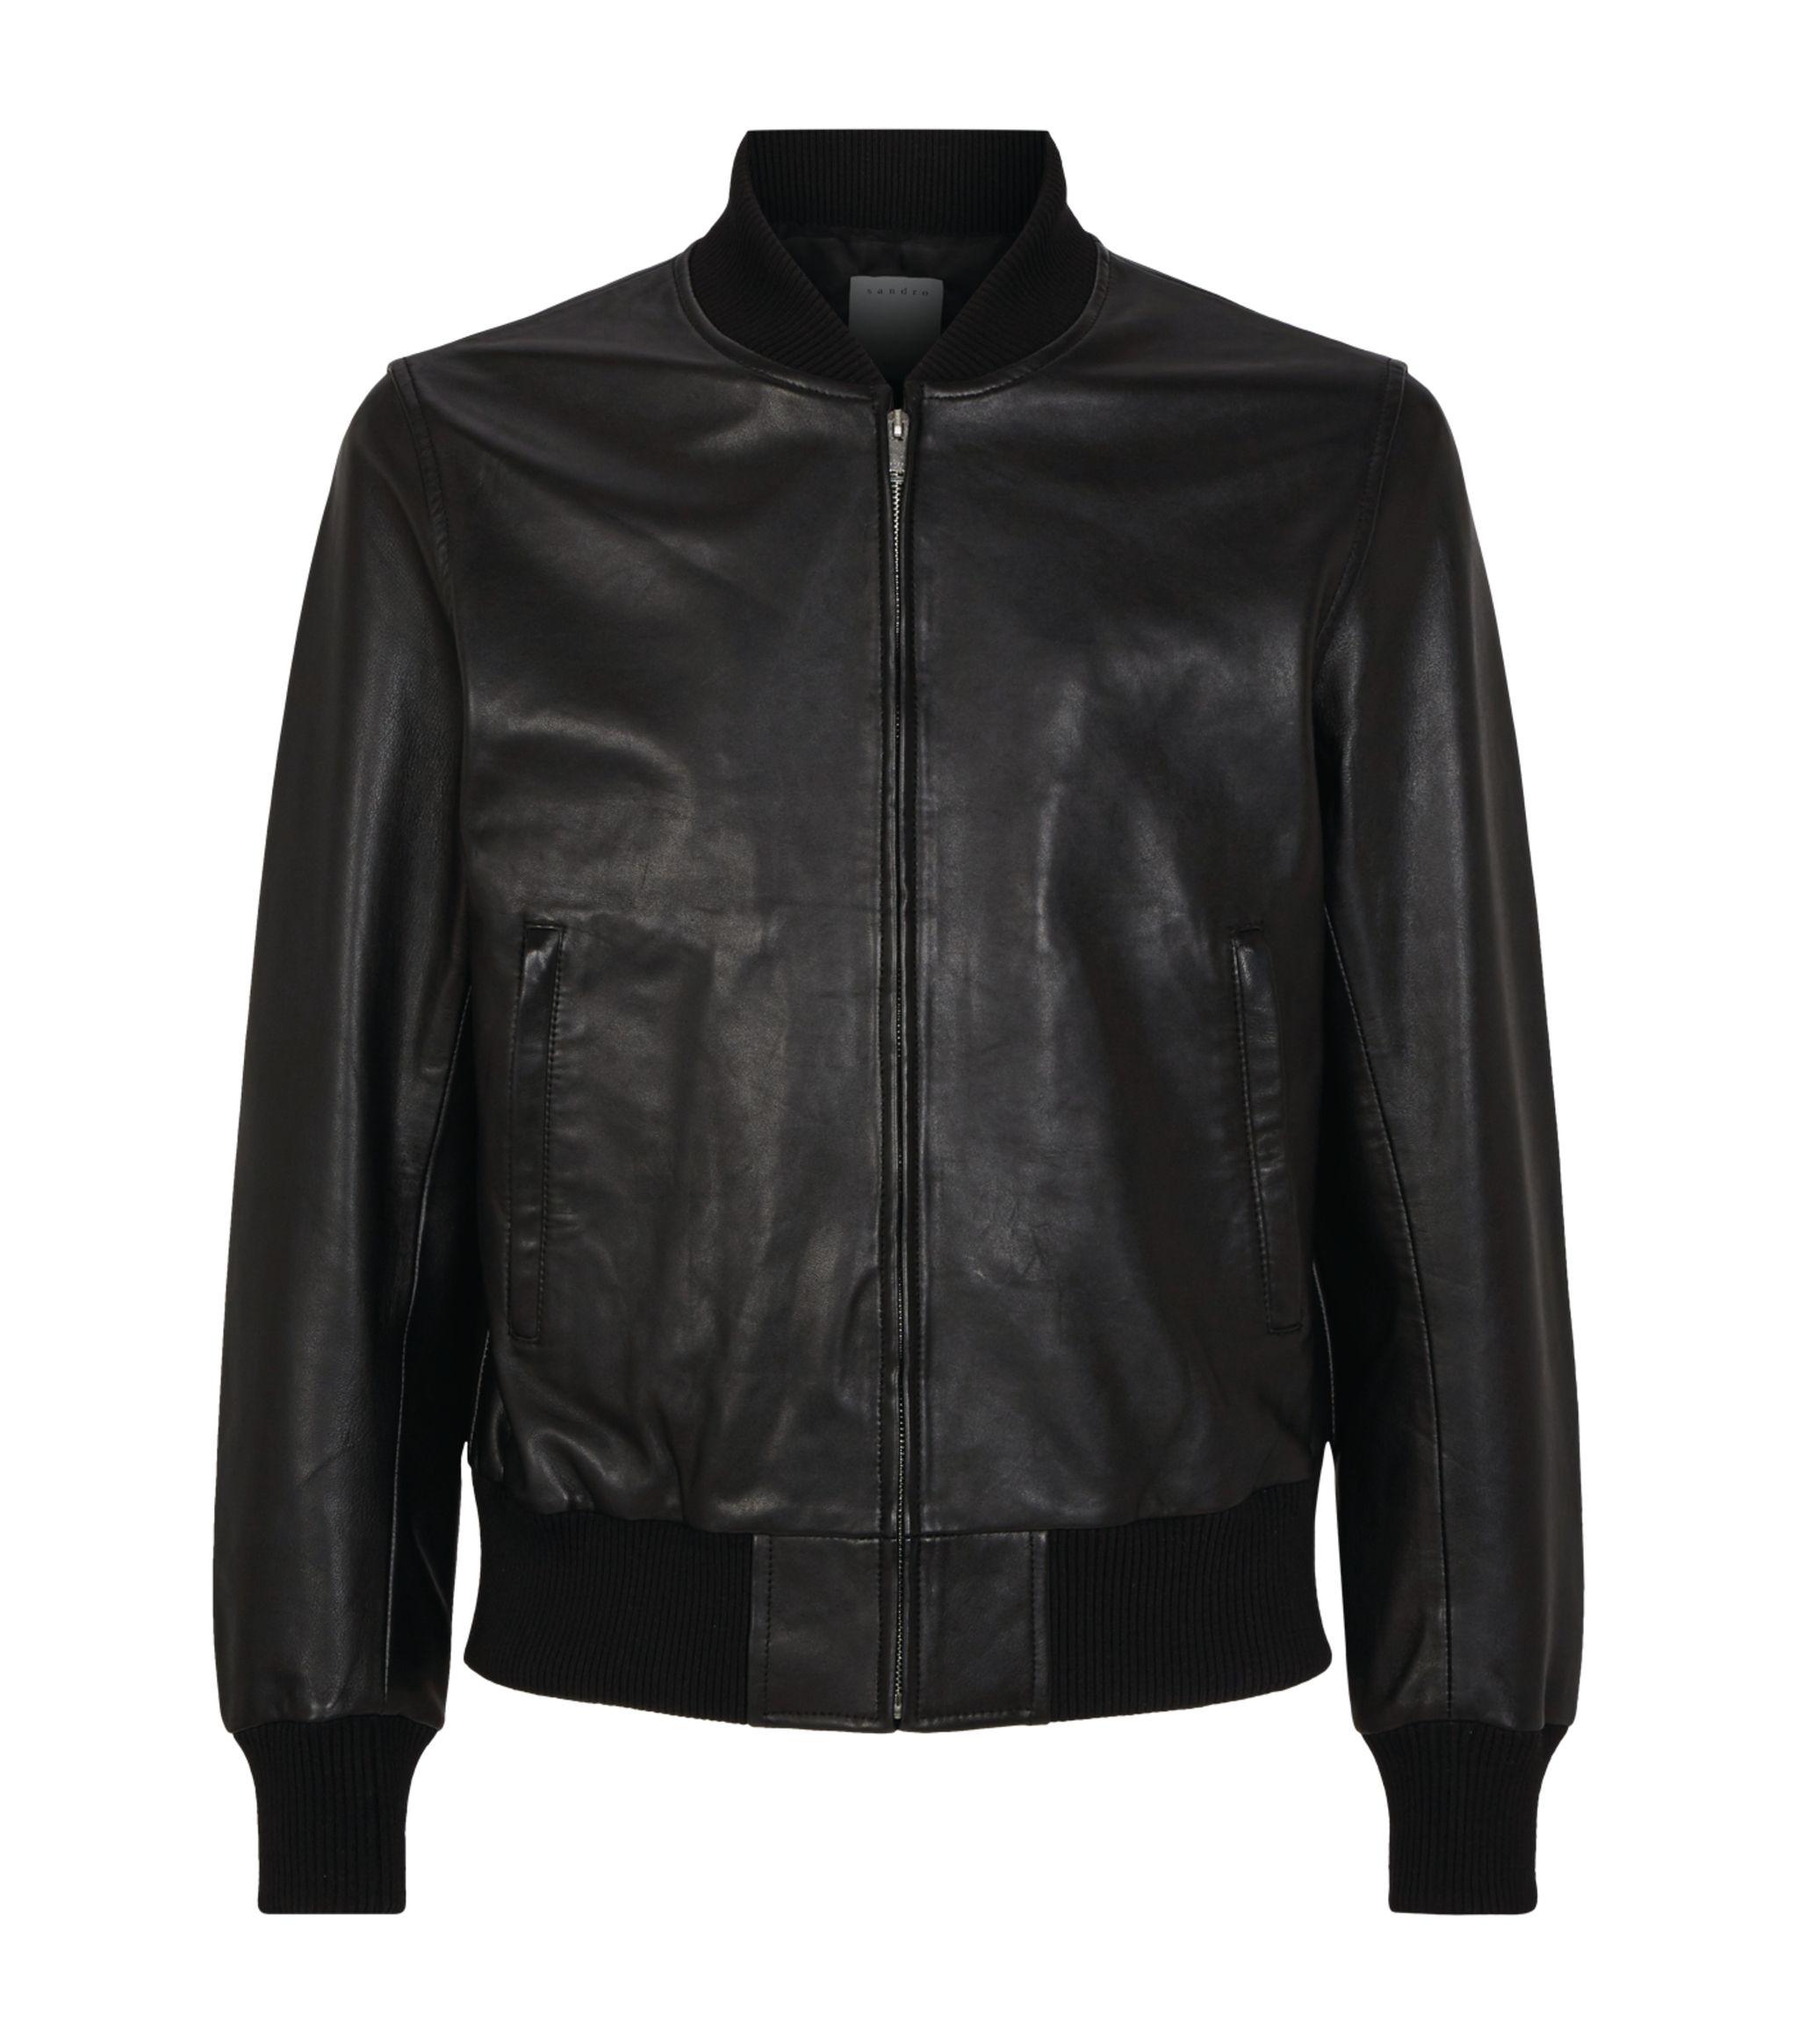 Sandro Leather Bomber Jacket in Black for Men - Save 21% - Lyst